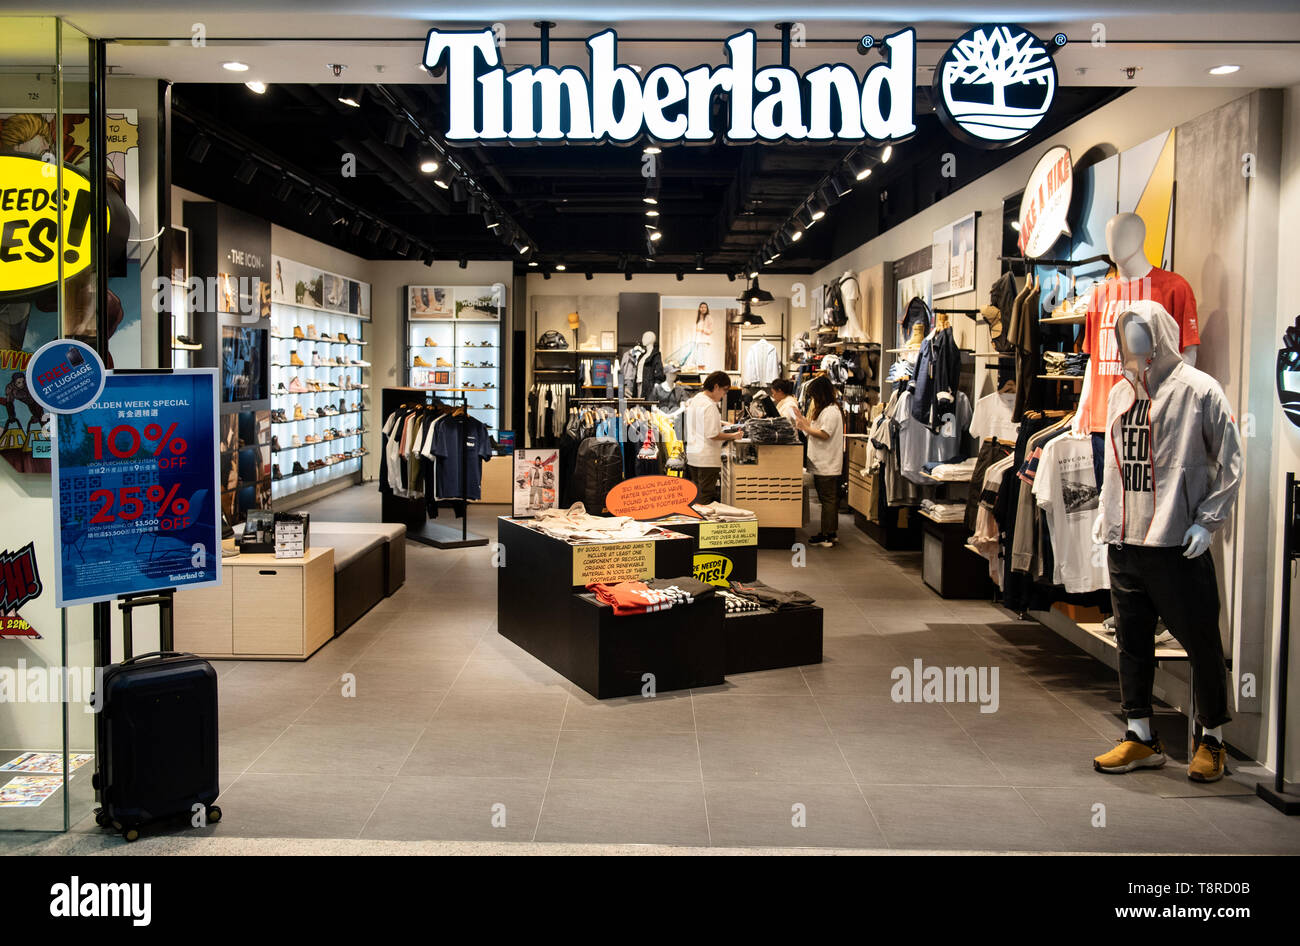 American prendas de vestir y calzado Empresa marcas Timberland visto en  Hong Kong Fotografía de stock - Alamy